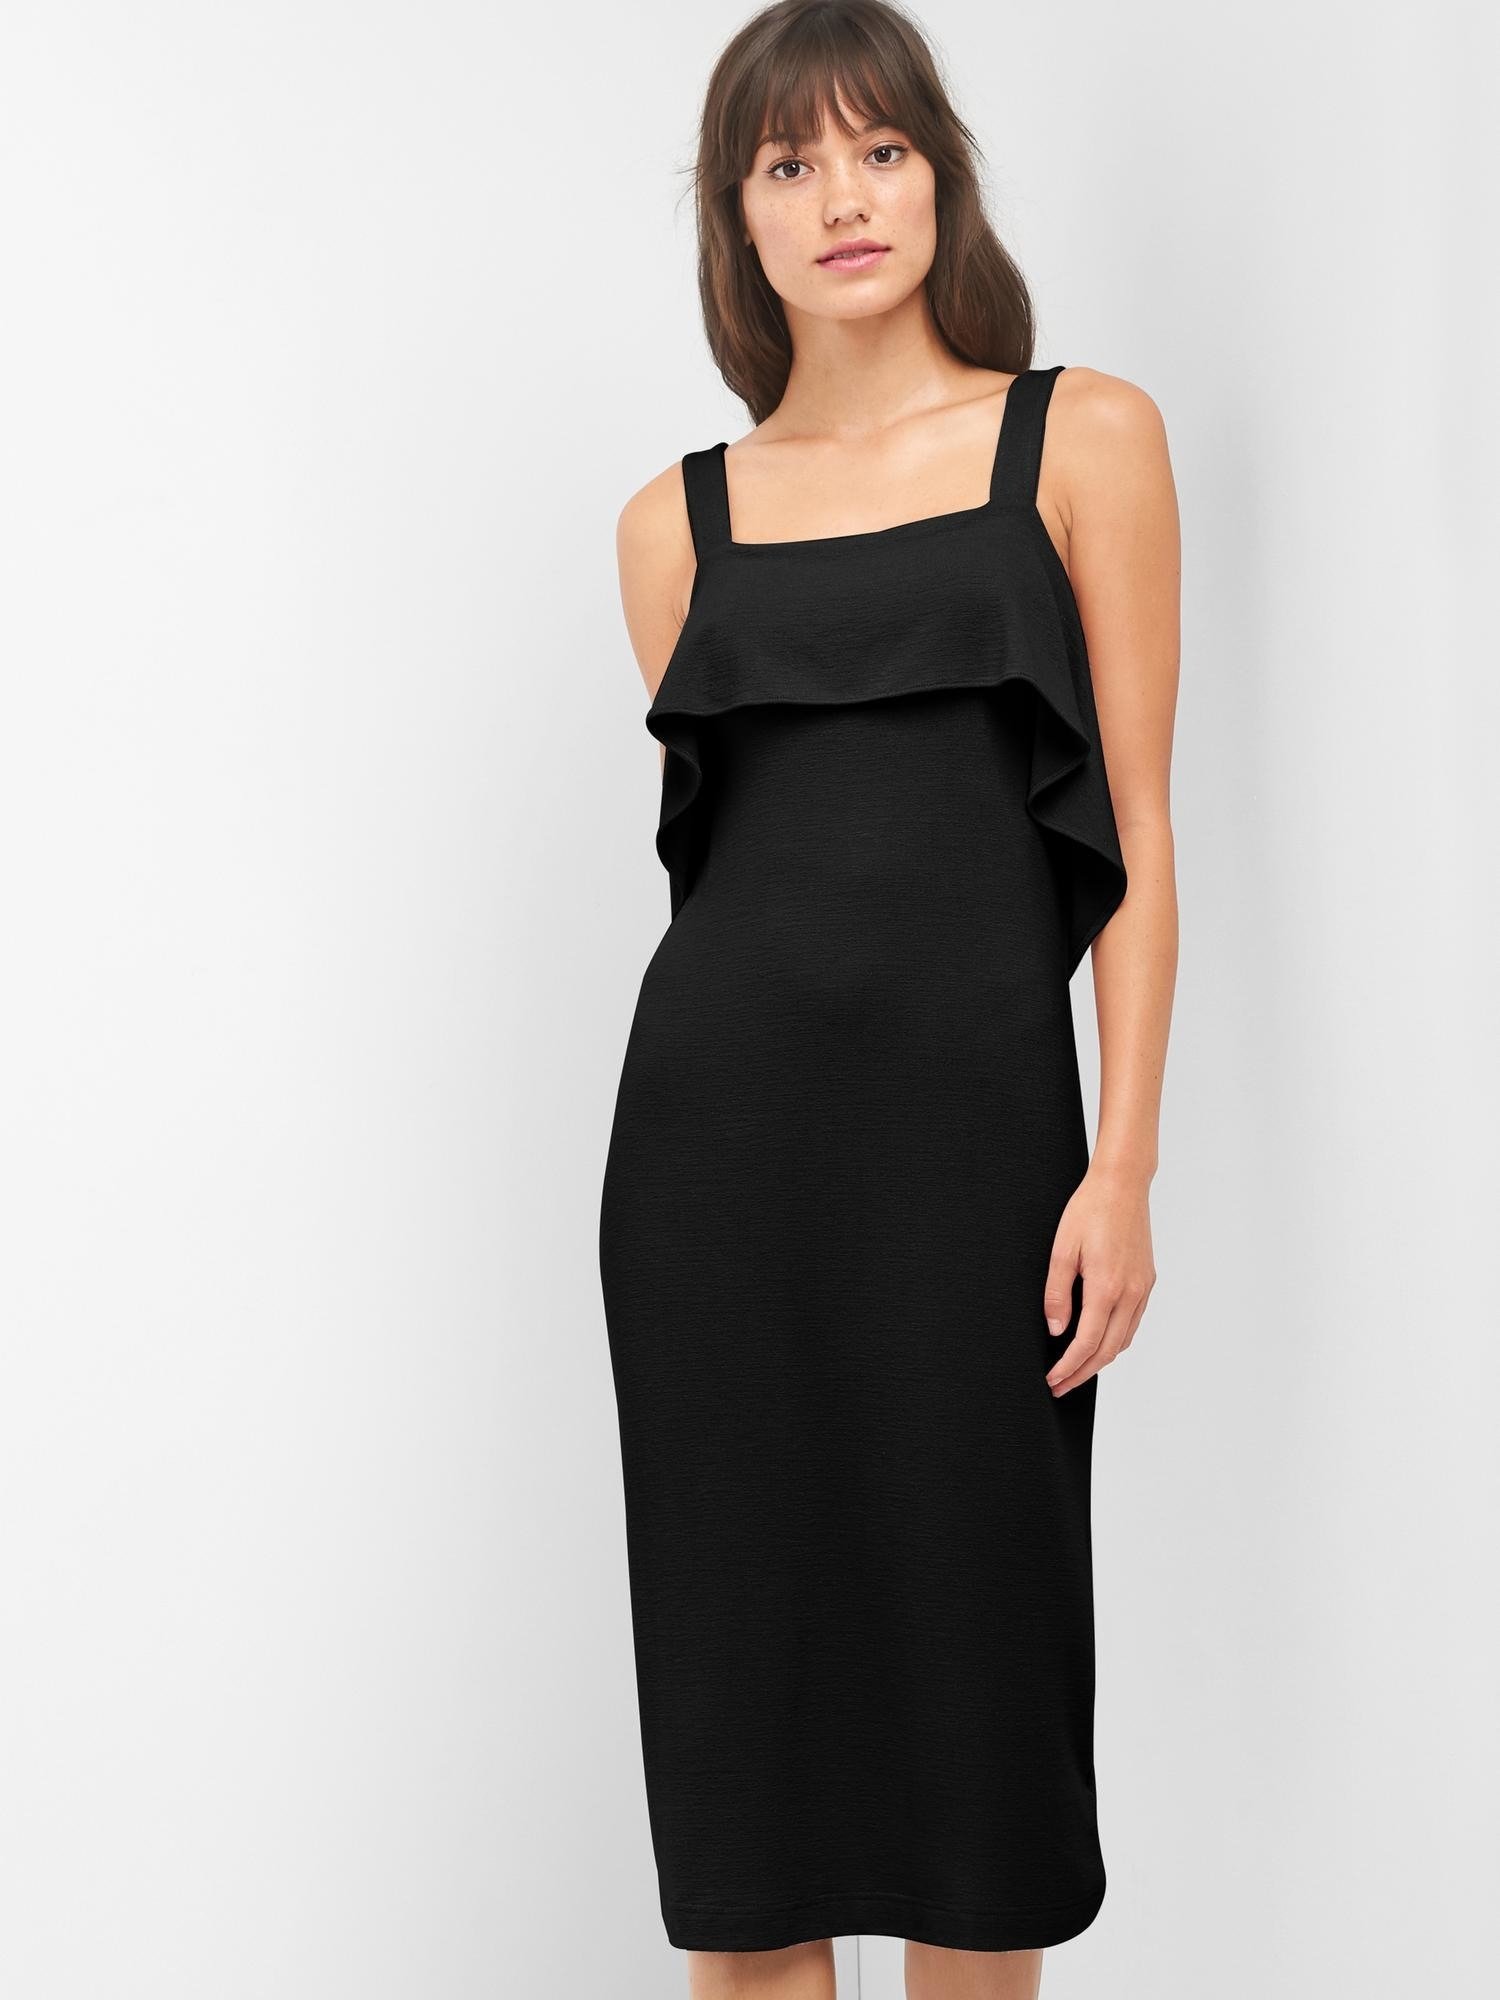 Softspun Elbise product image